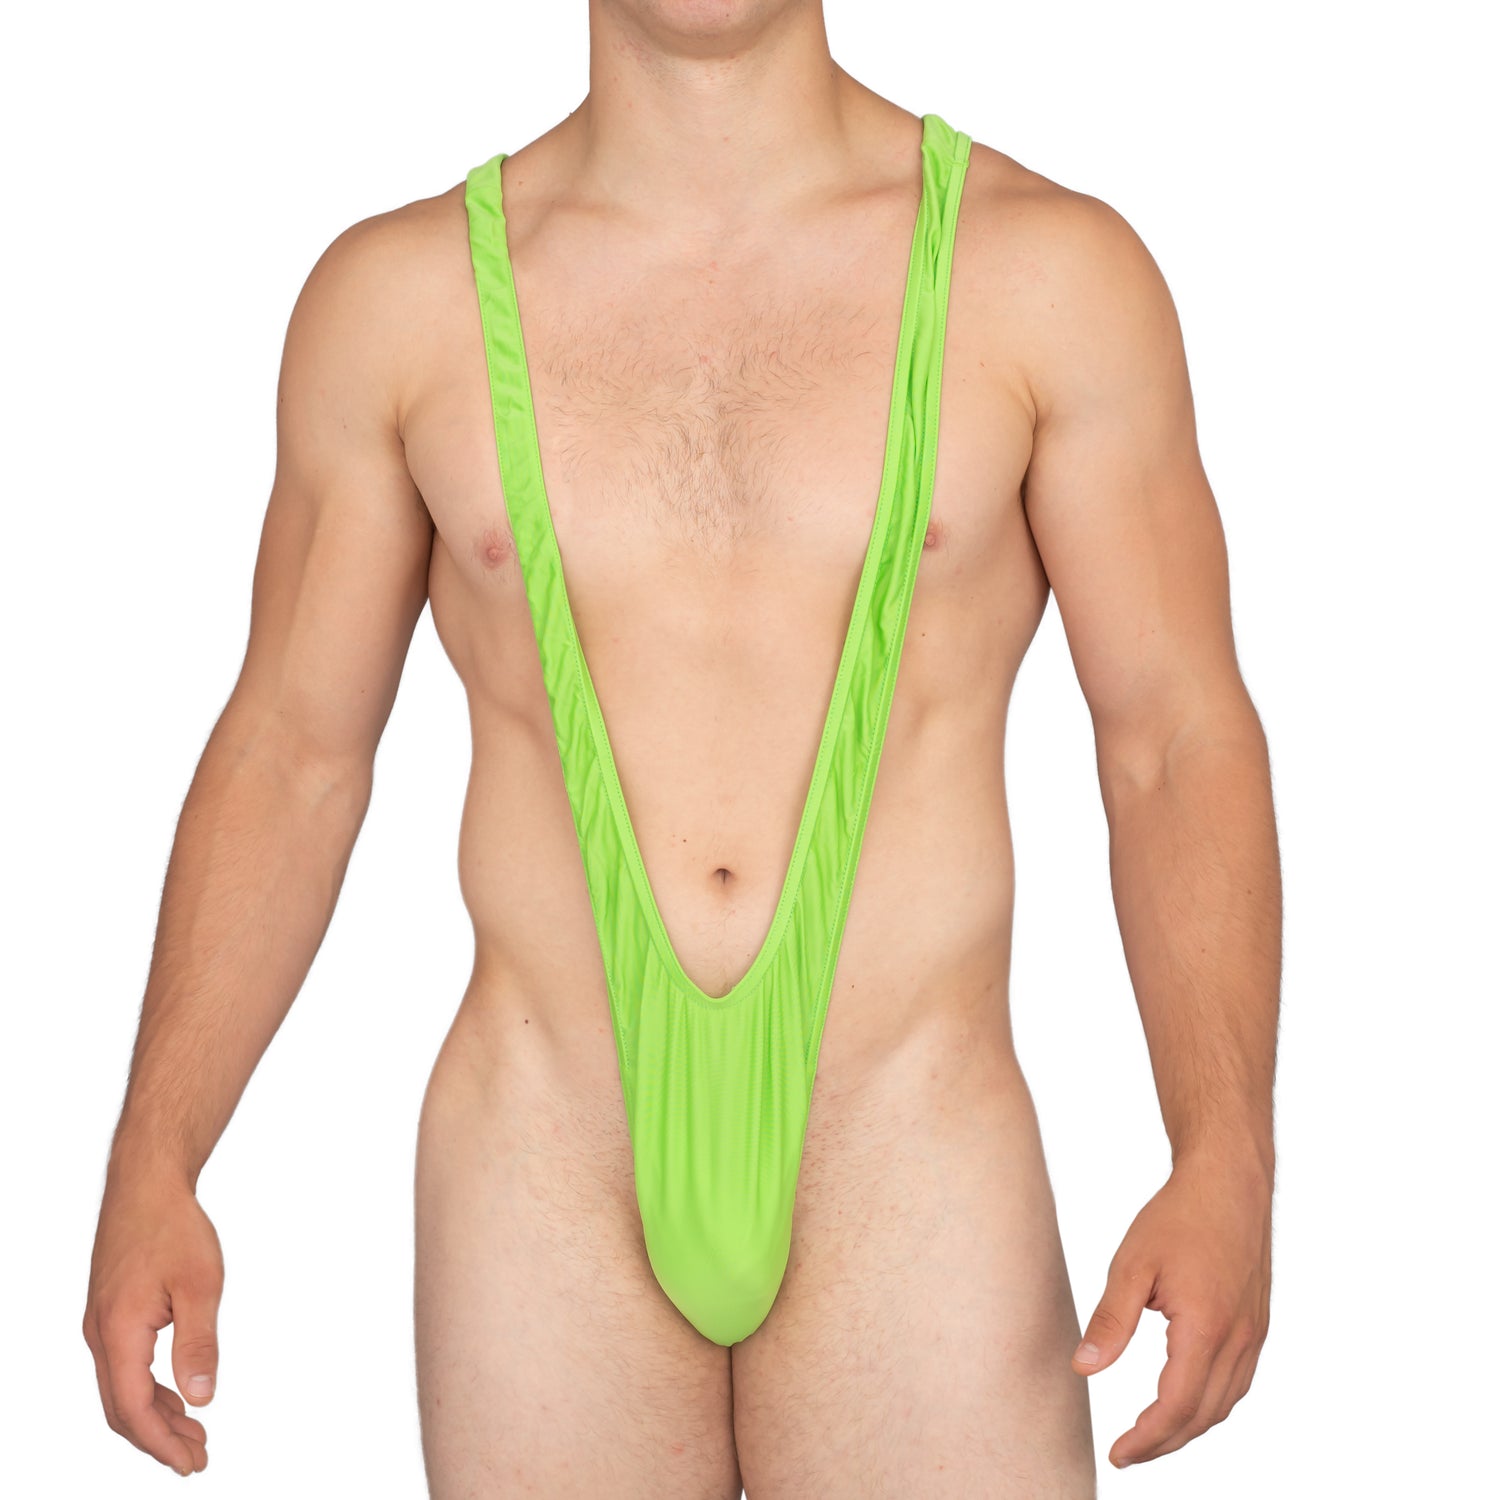 Borat Mankini Swimsuit Costume | Mankini.com mankini.com